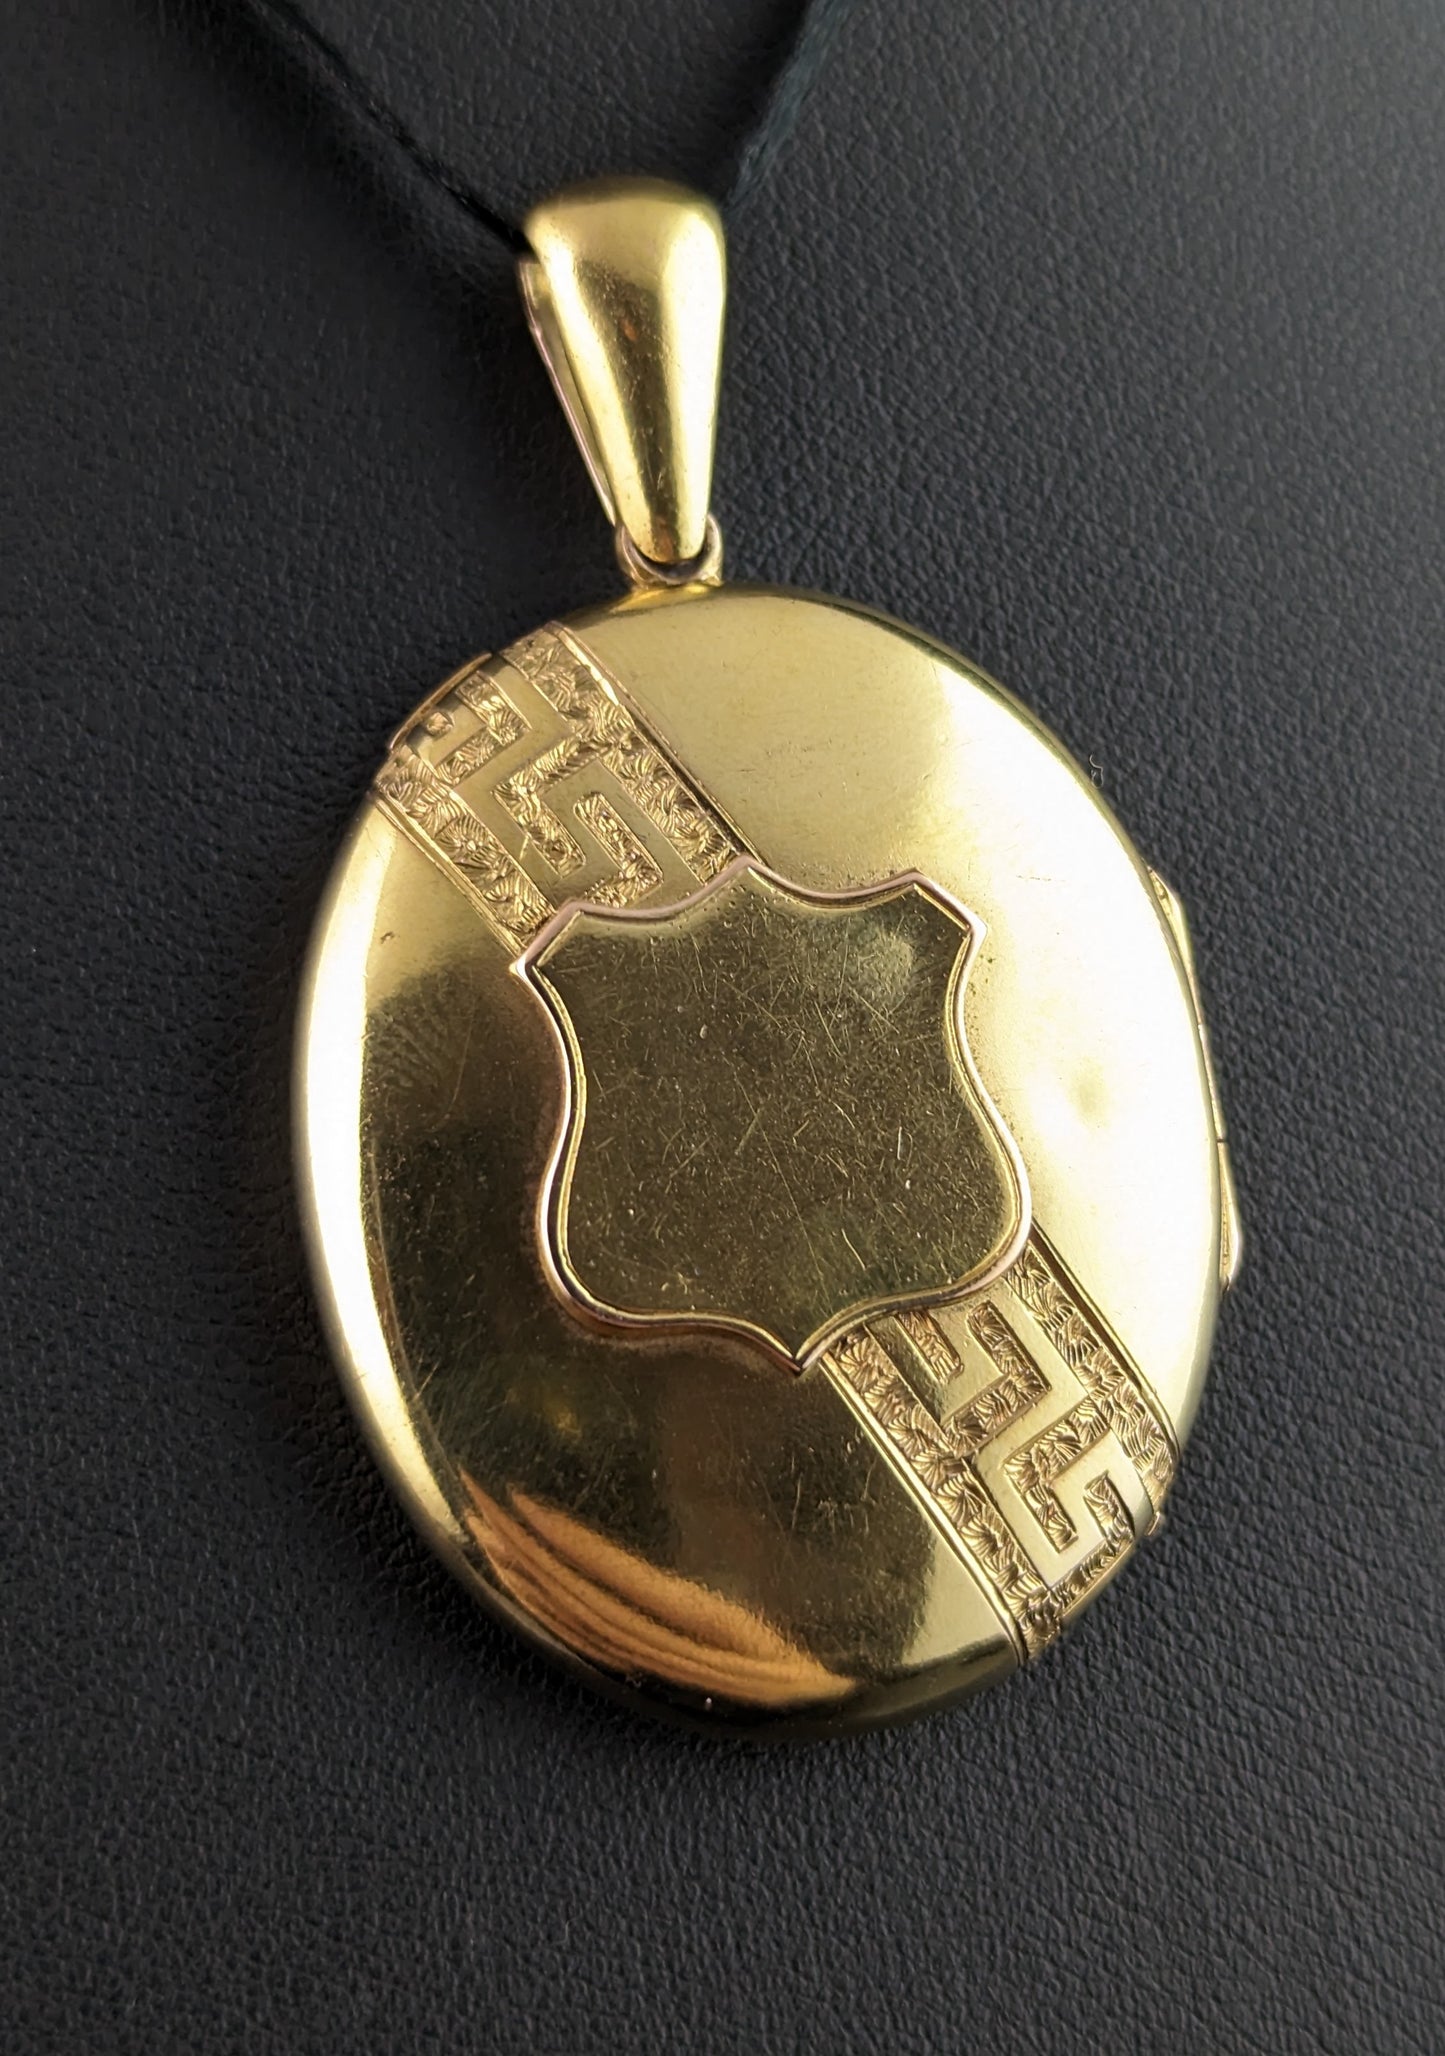 Antique 15ct gold locket pendant, Greek key, Victorian